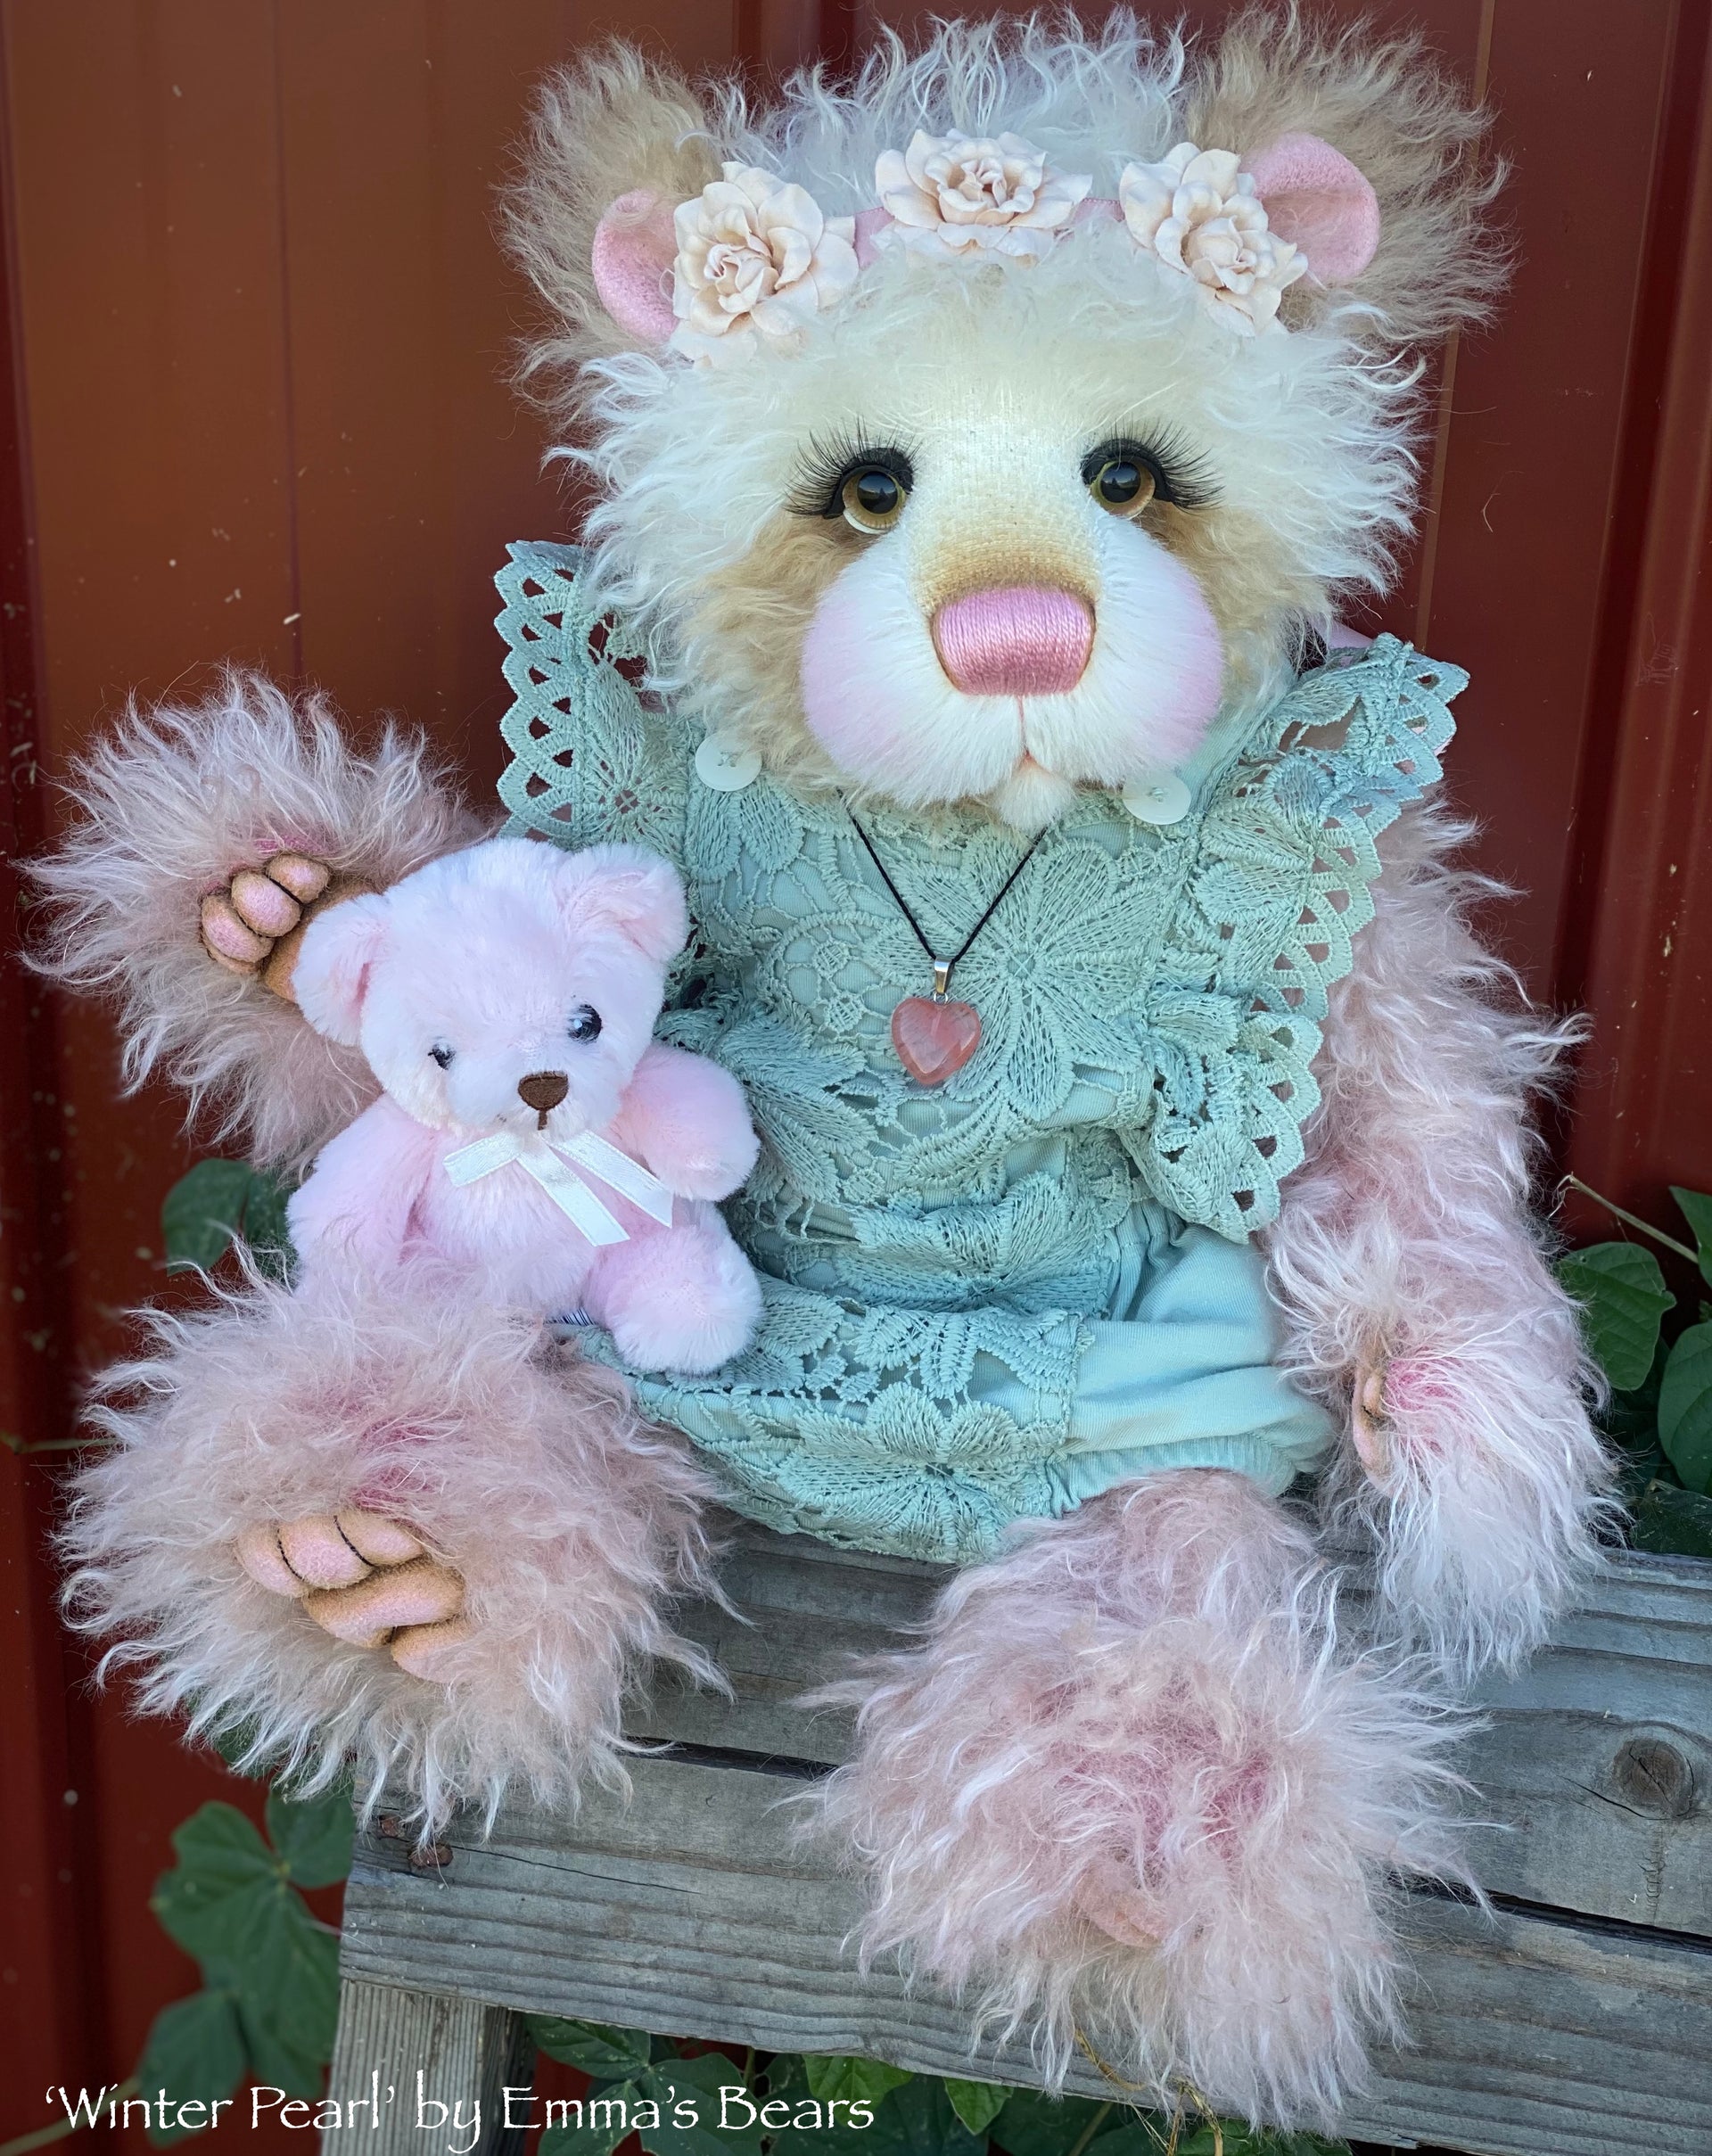 Winter Pearl - 18" Hand-Dyed Mohair Artist Baby Bear by Emma's Bears - OOAK